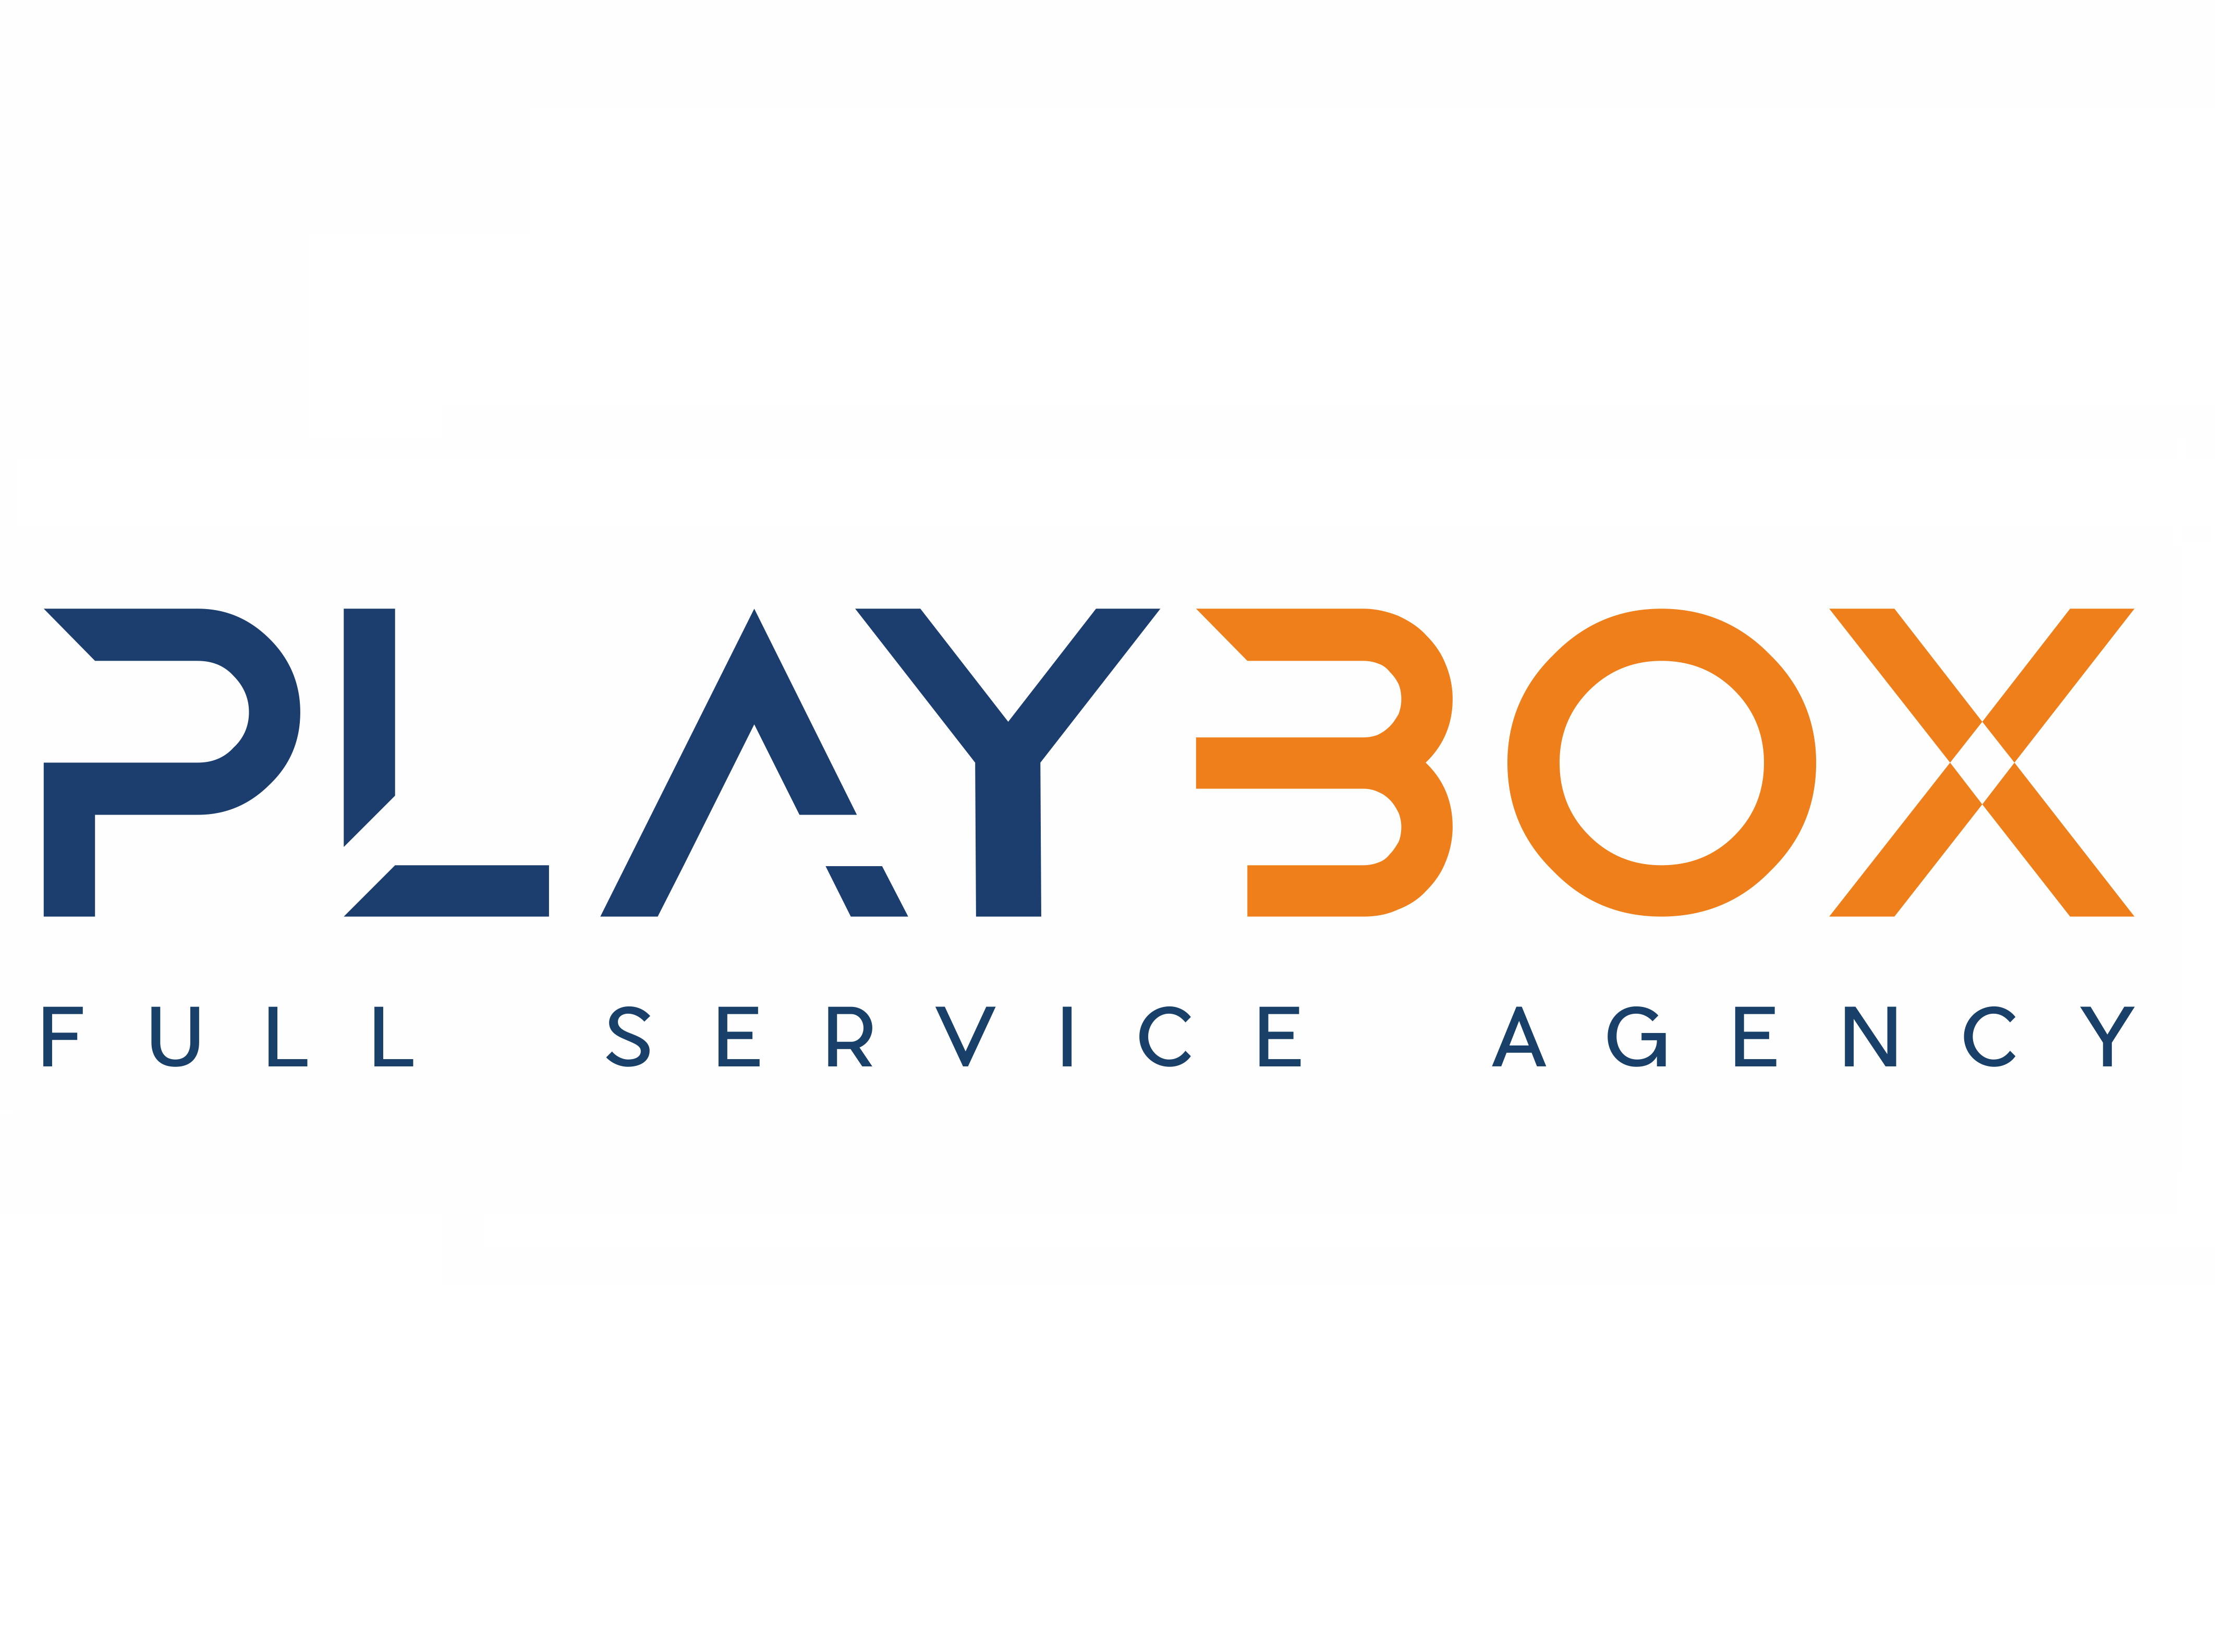 PLAYBOX Logo